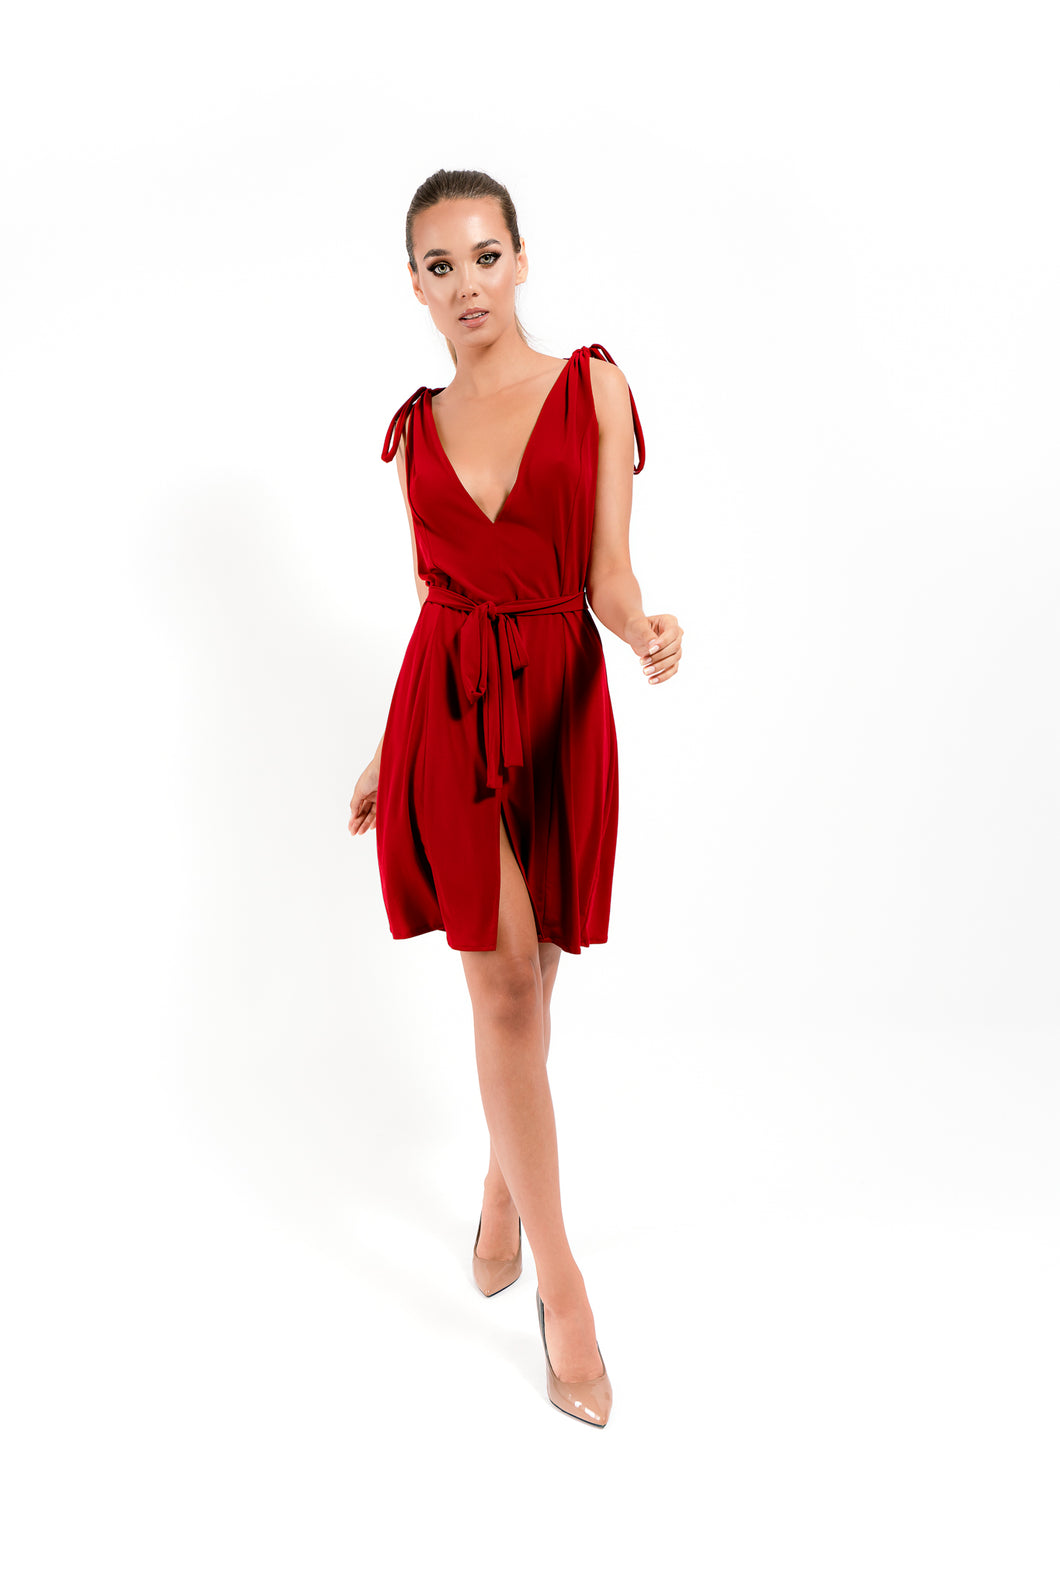 Sexy Red Dress - Velmoft